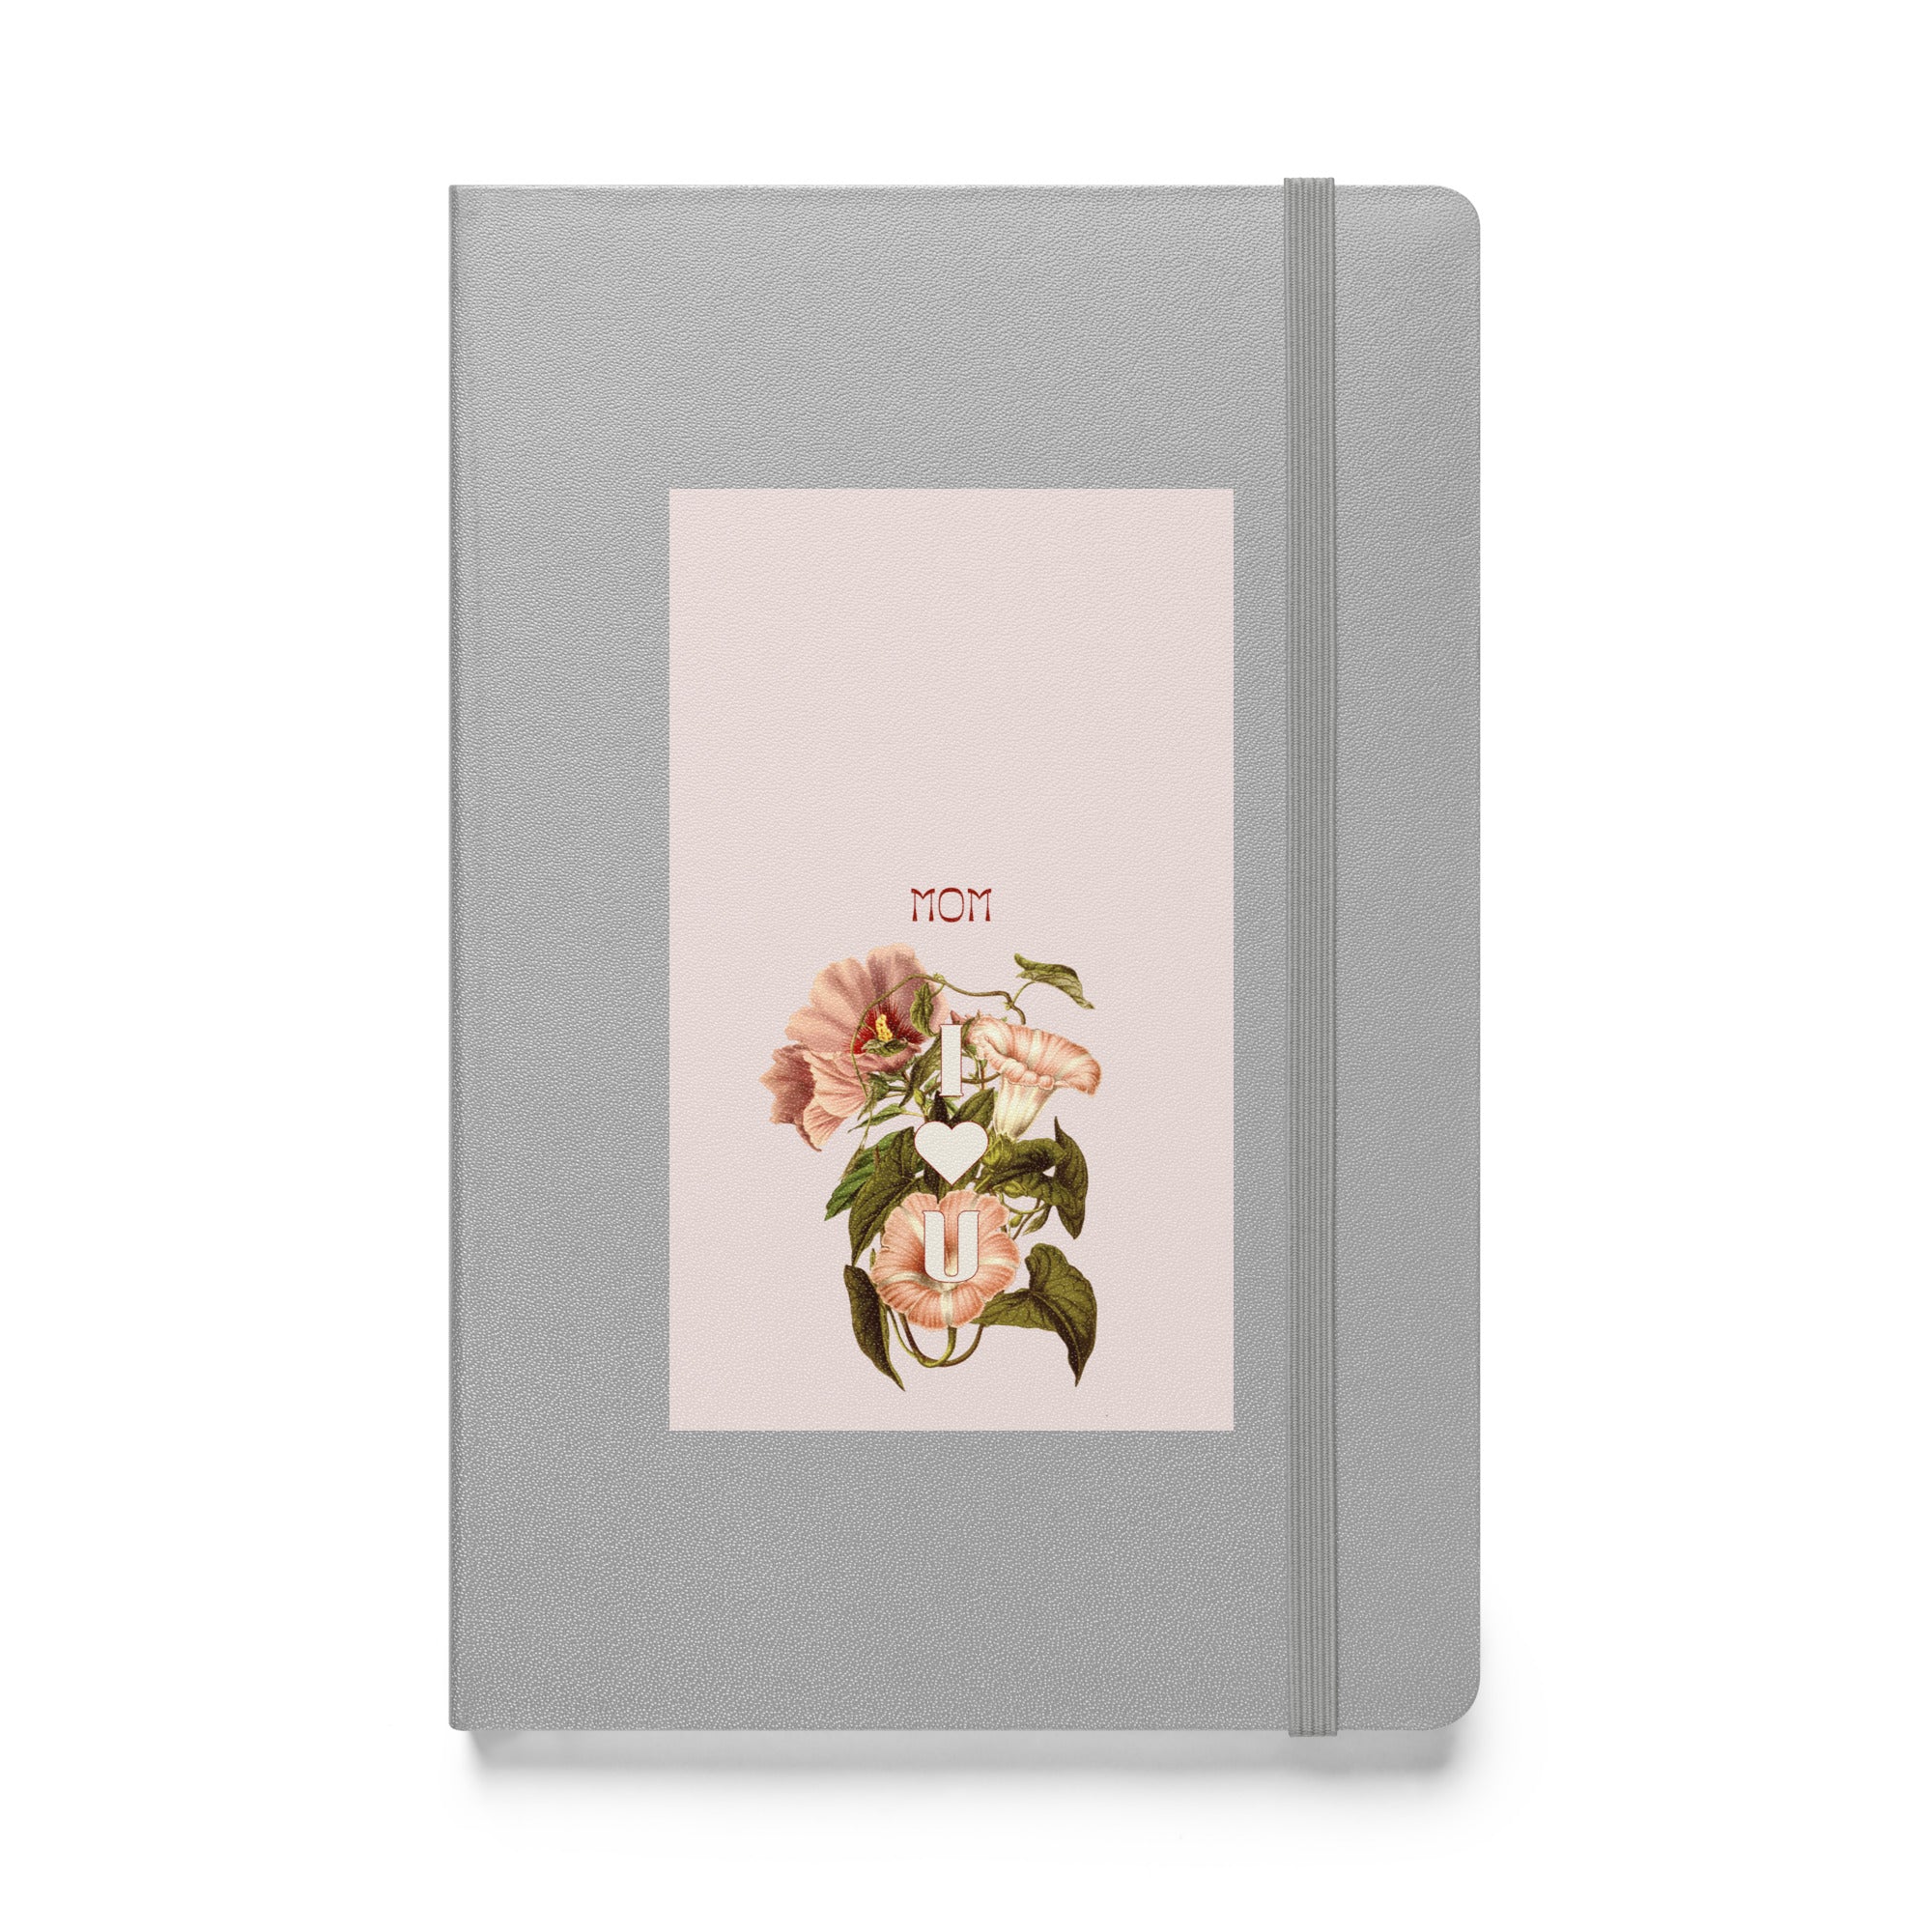 Hardcover bound notebook - I love you Mom